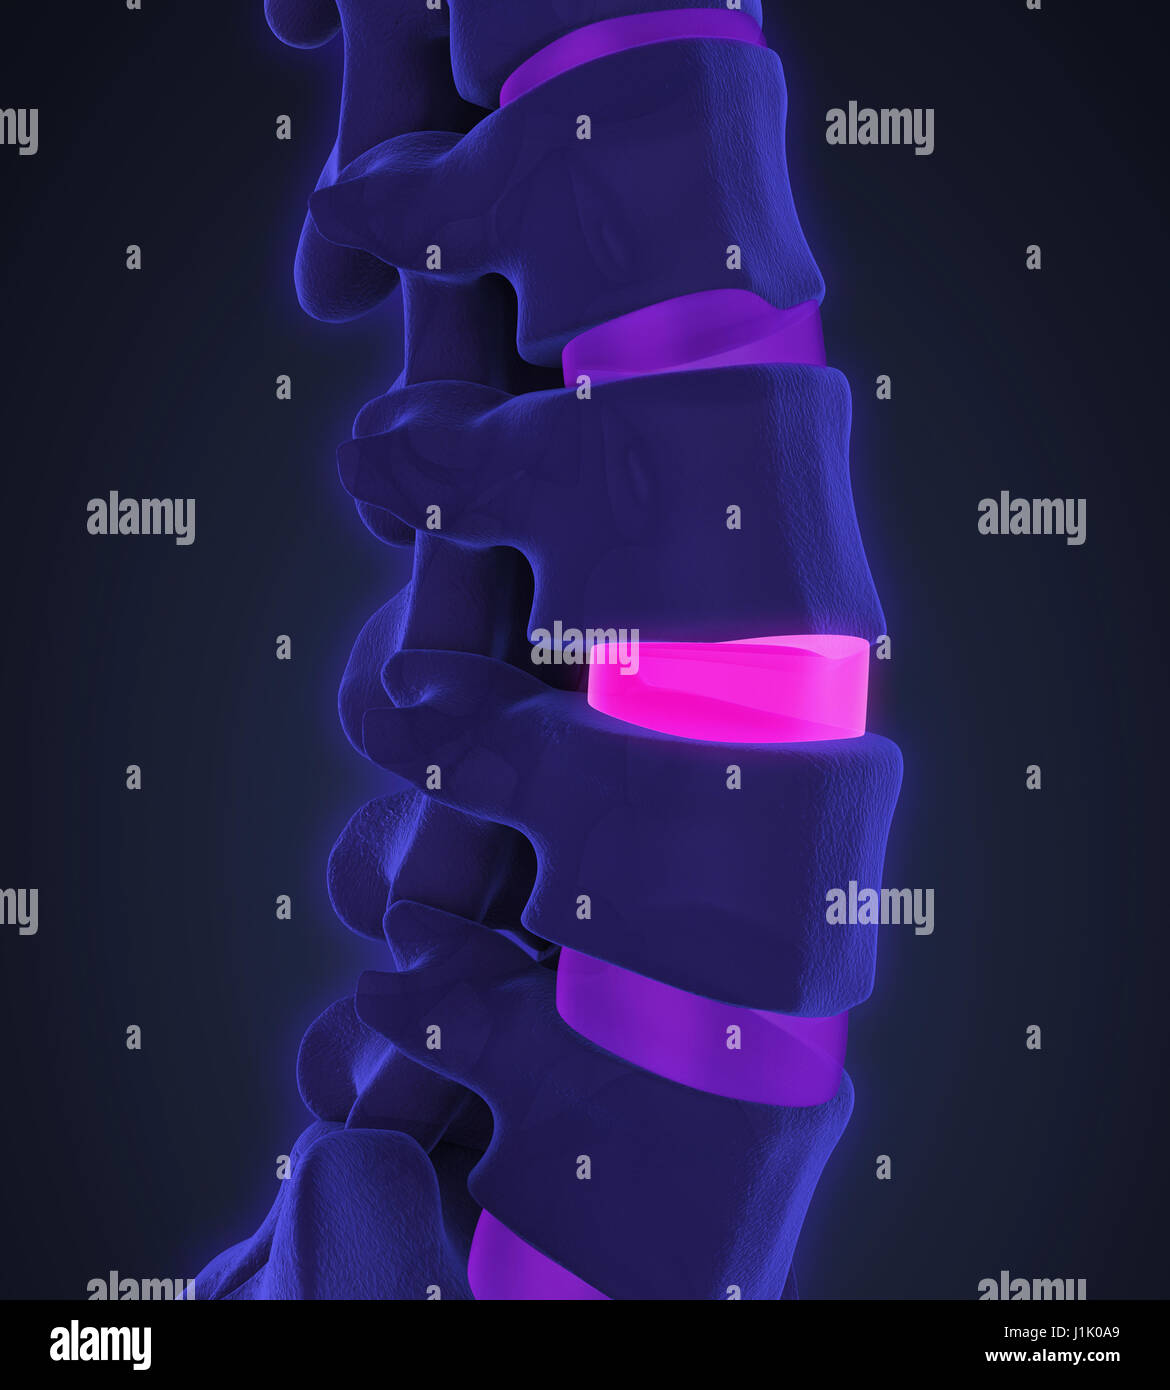 Human Spine Anatomy Illustration Stock Photo